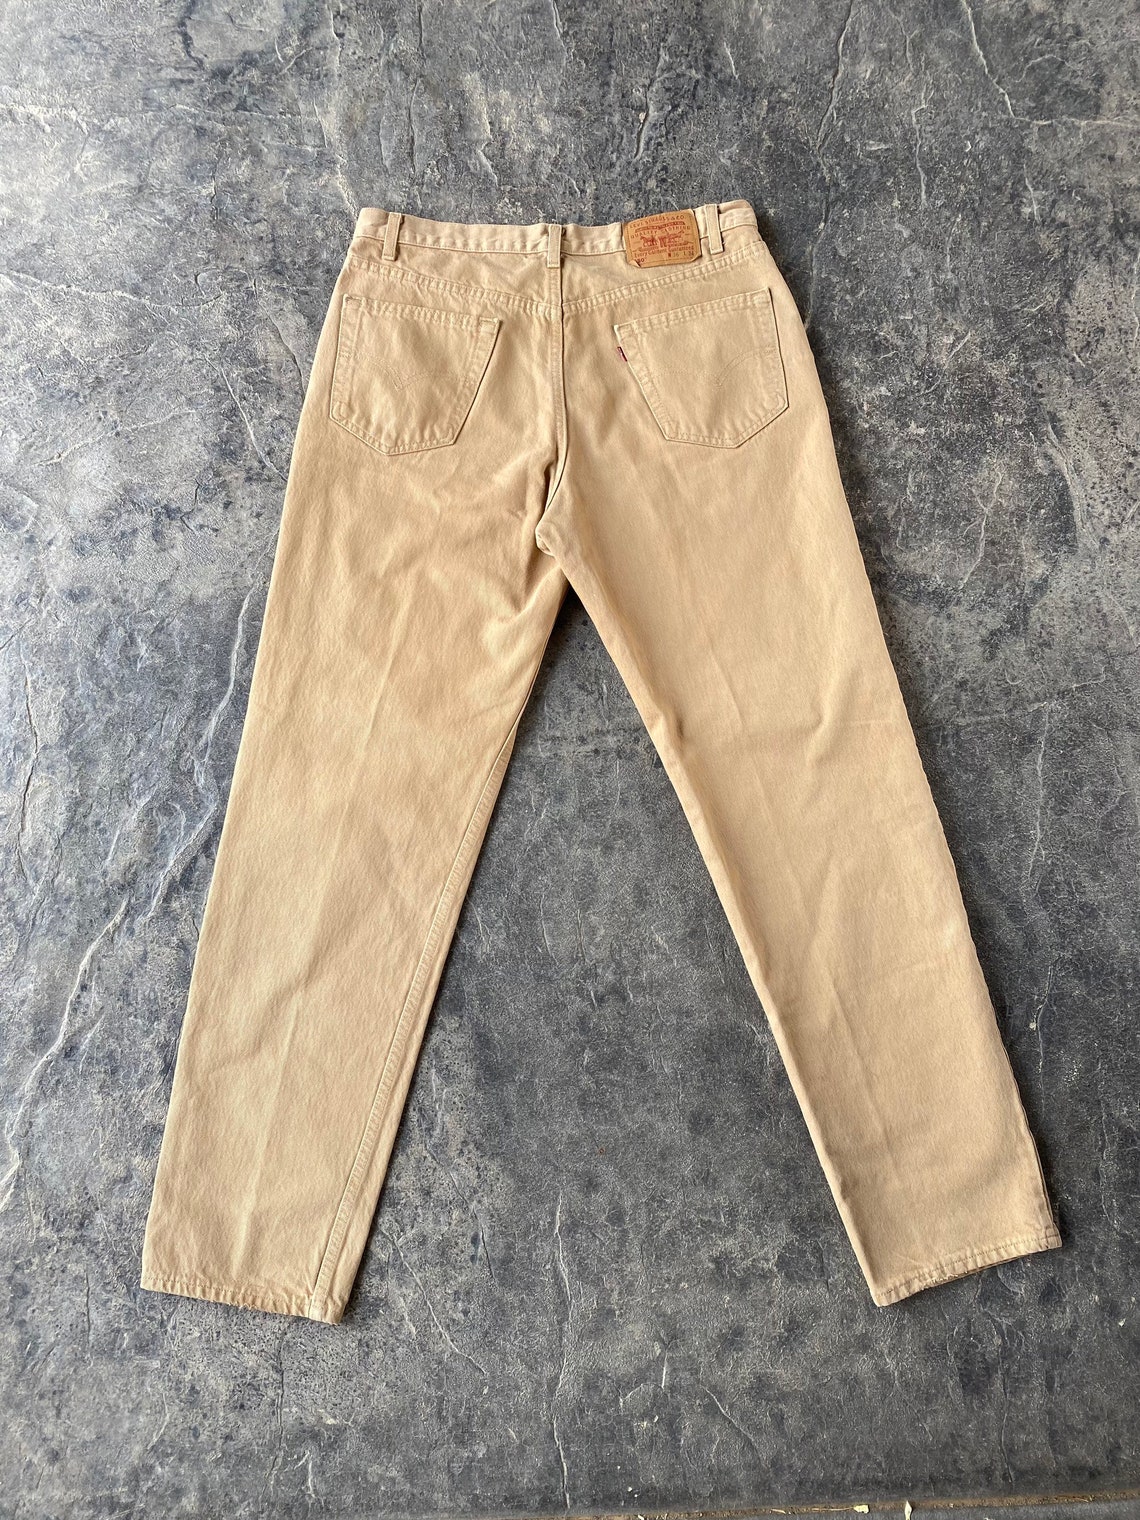 90s Levis 550 Relaxed Fit Jeans Tan Khaki Vintage 36 | Etsy